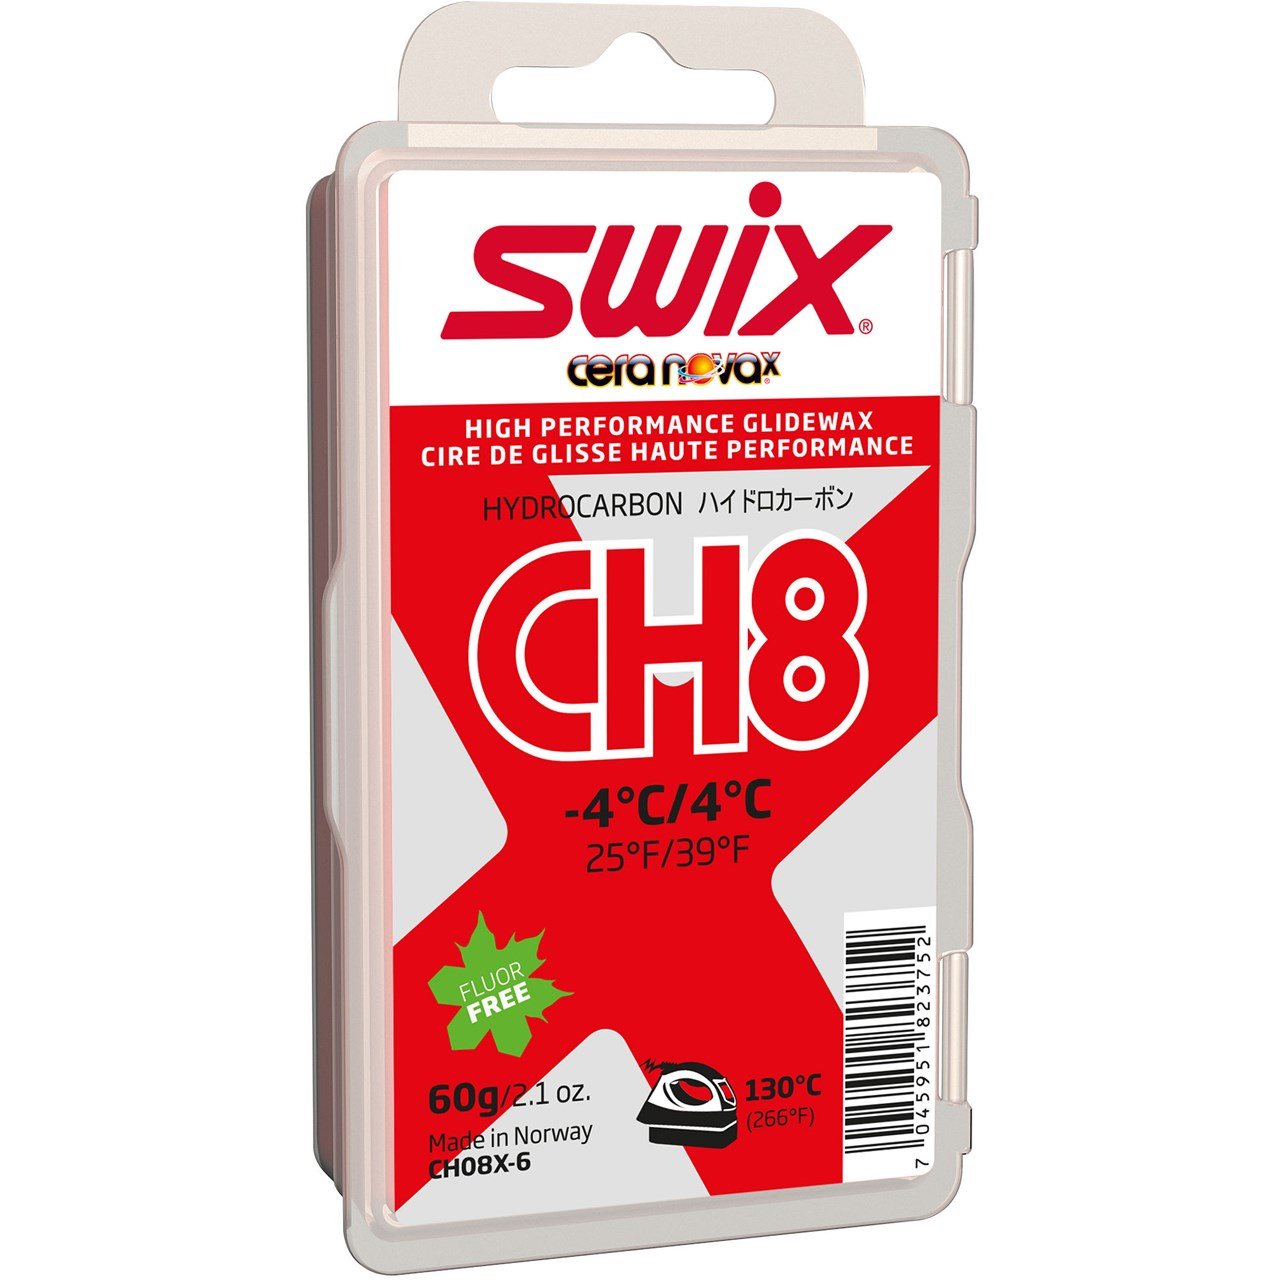 Swix  CH8X Red, -4°C/4°C, 60g